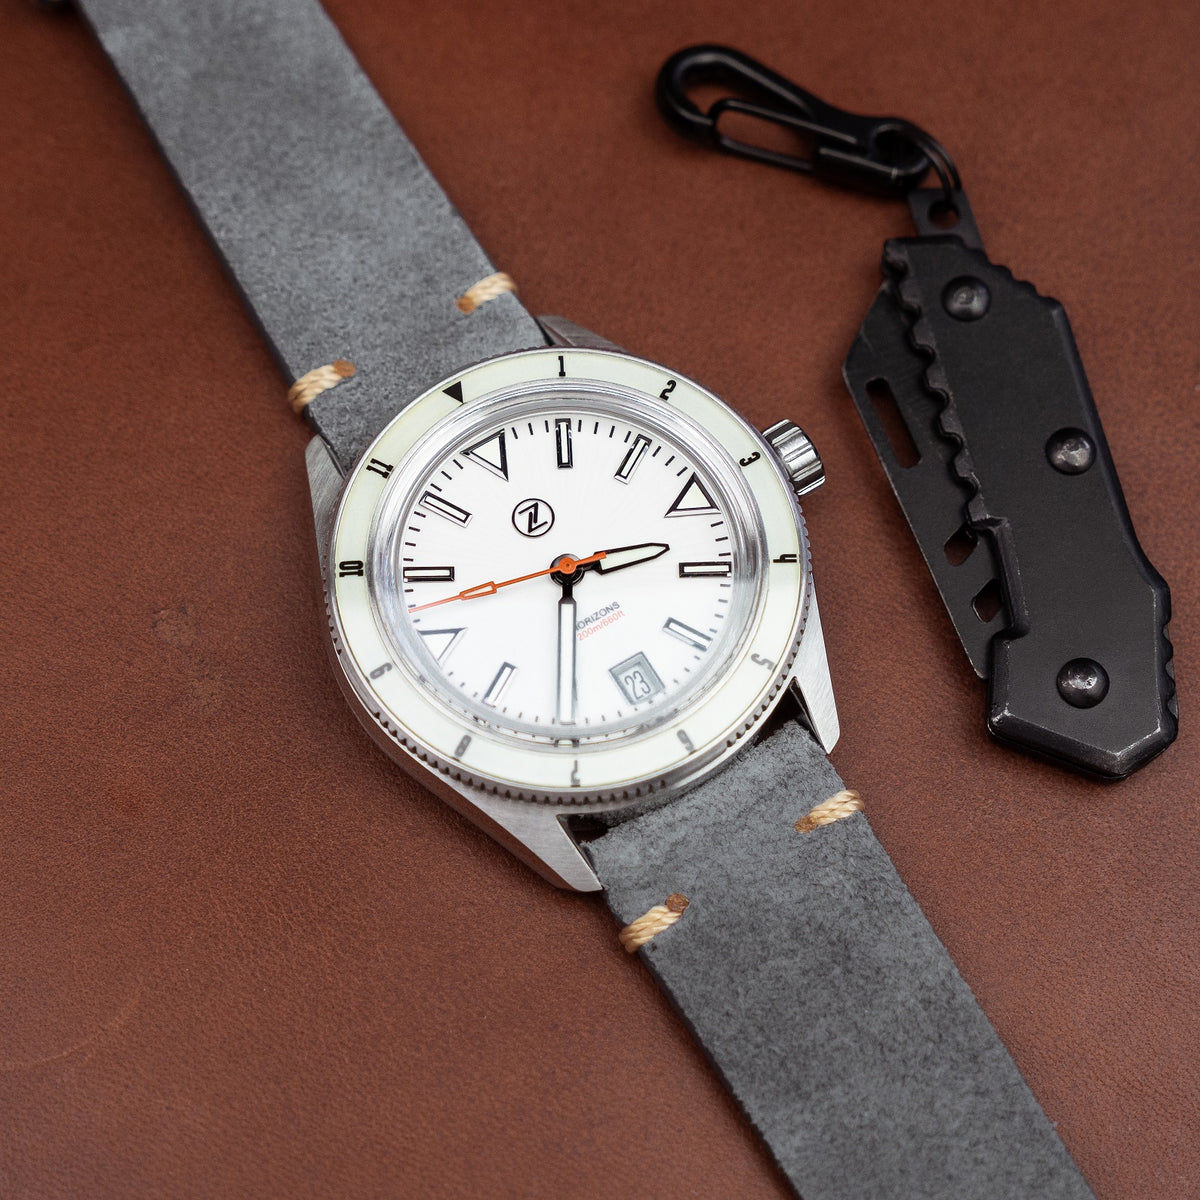 Premium Vintage Suede Leather Watch Strap in Grey (18mm) - Nomad Watch Works MY